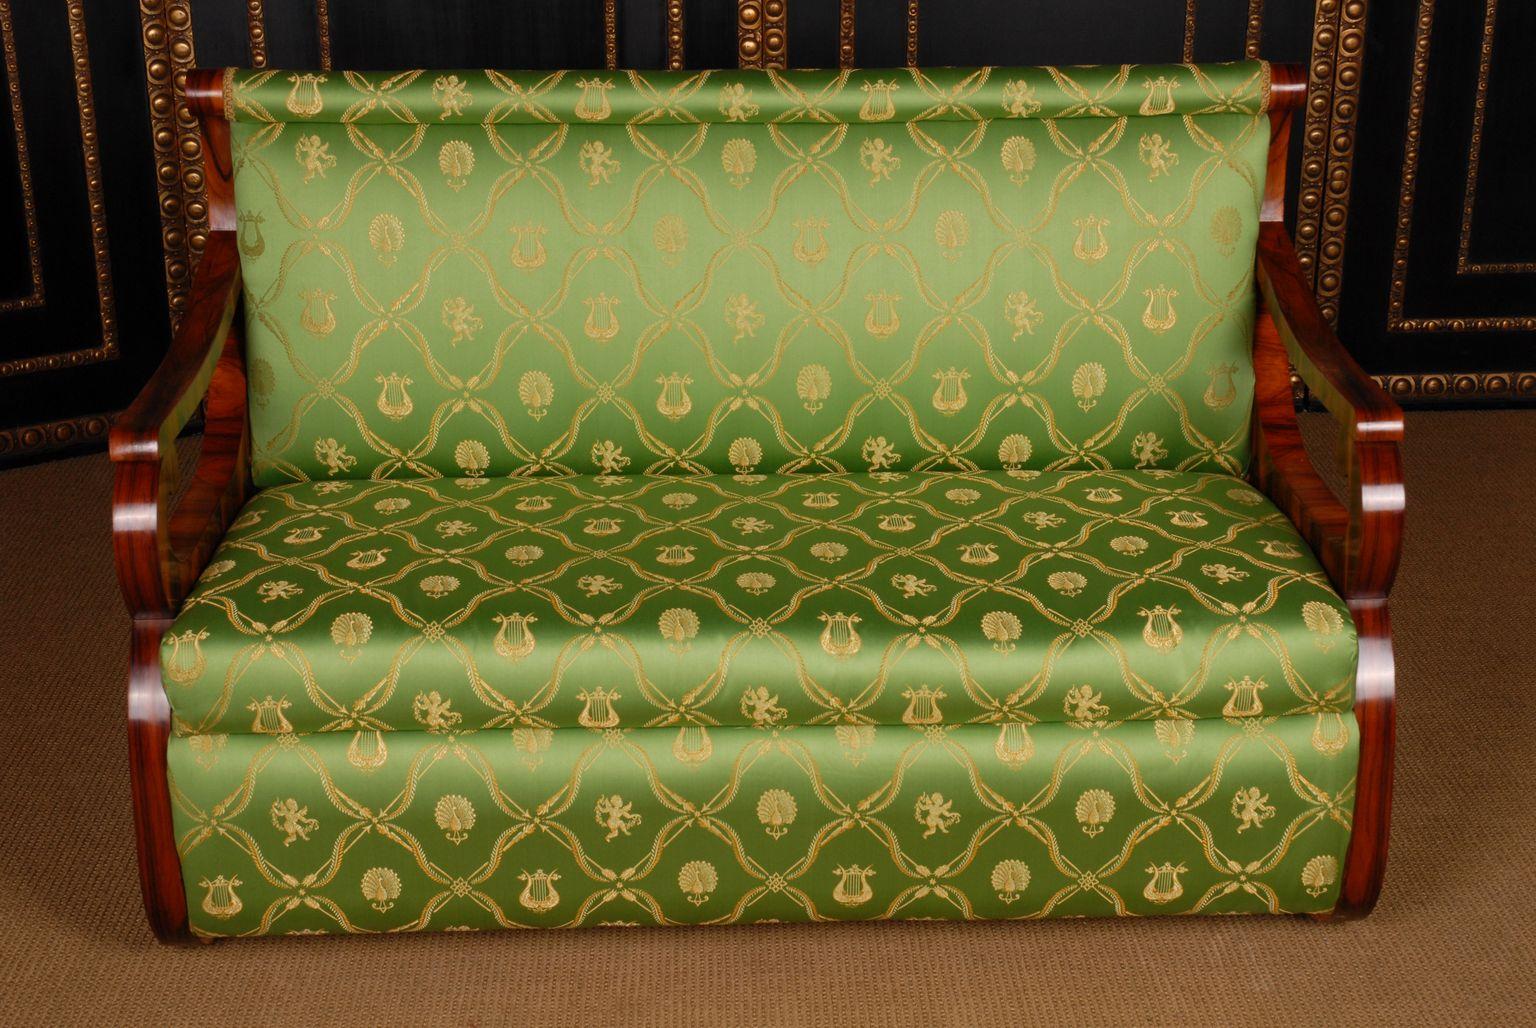 20th Century Unique Empire Biedermeier Style Canape Sofa In Good Condition For Sale In Berlin, DE